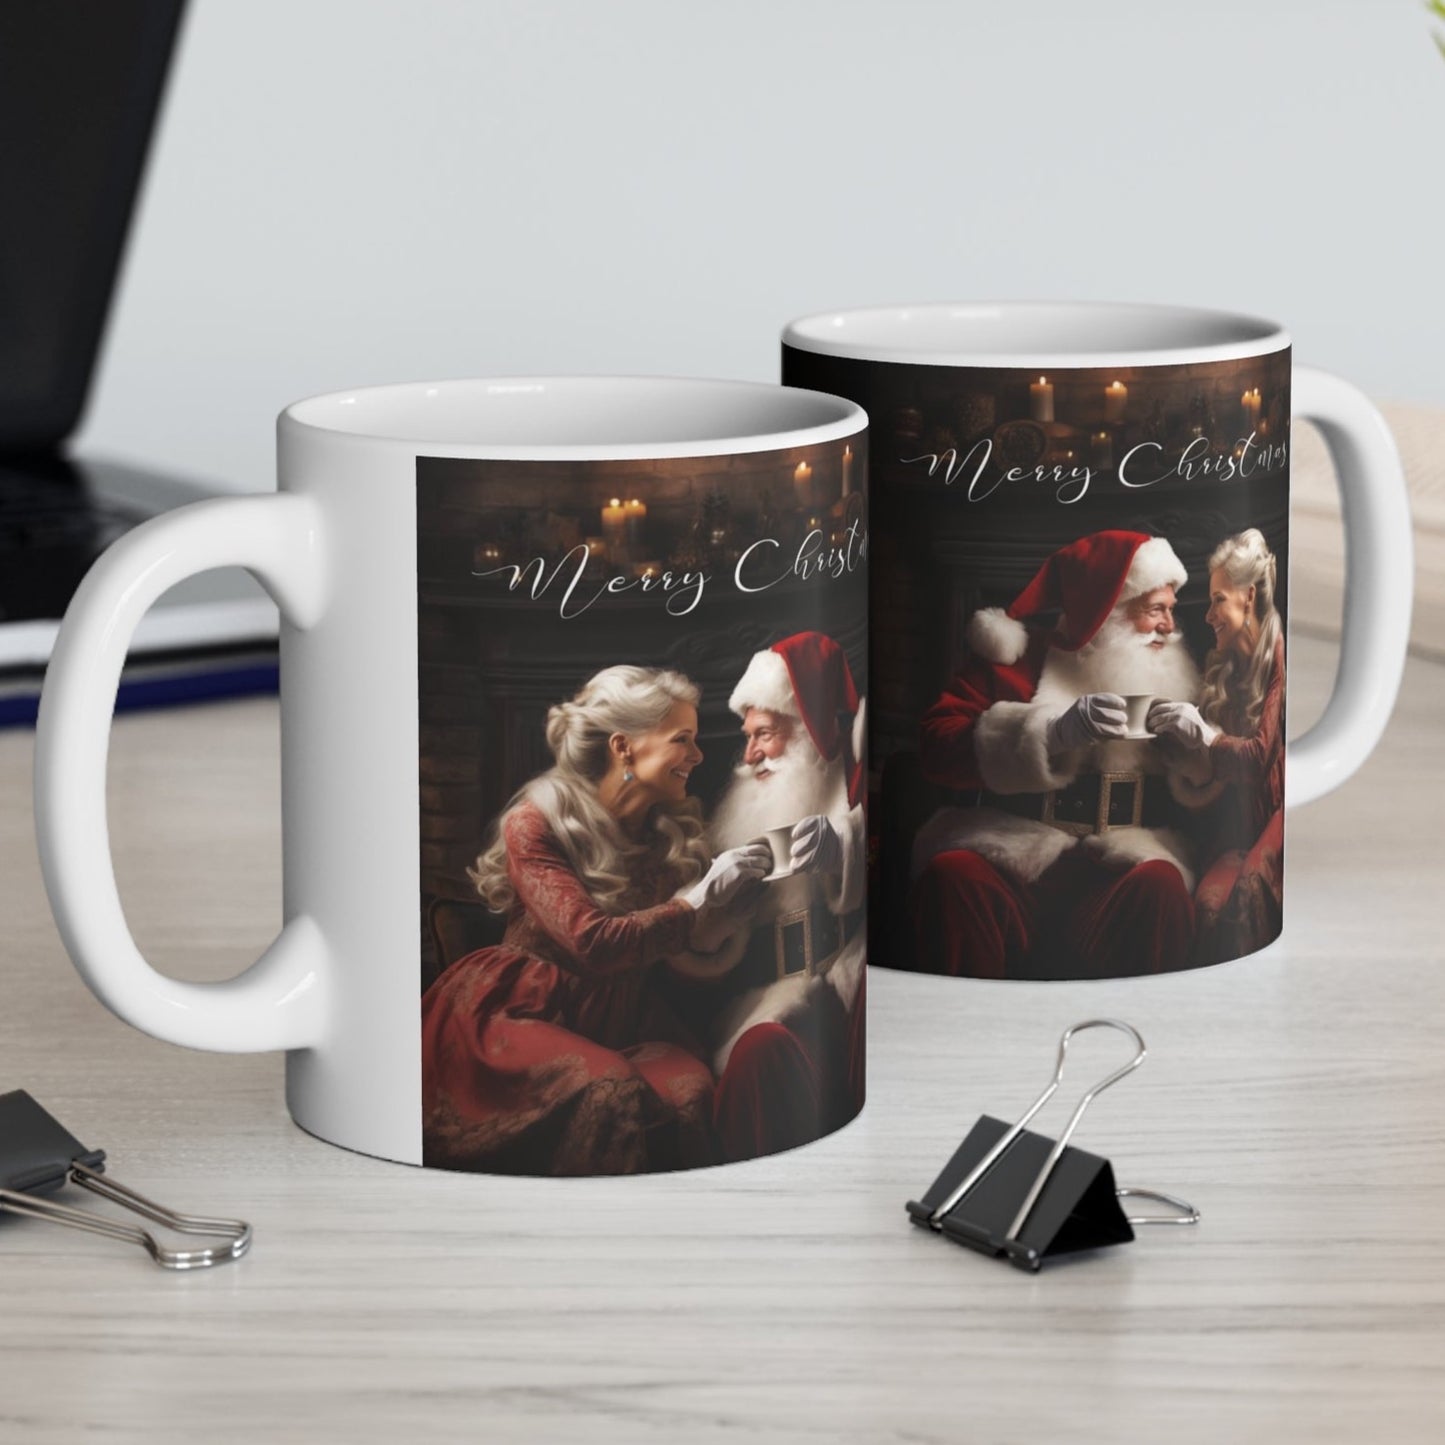 Mr. and Mrs. Claus Christmas Coffee Mug Christmas Santa Claus Coffee Mugs